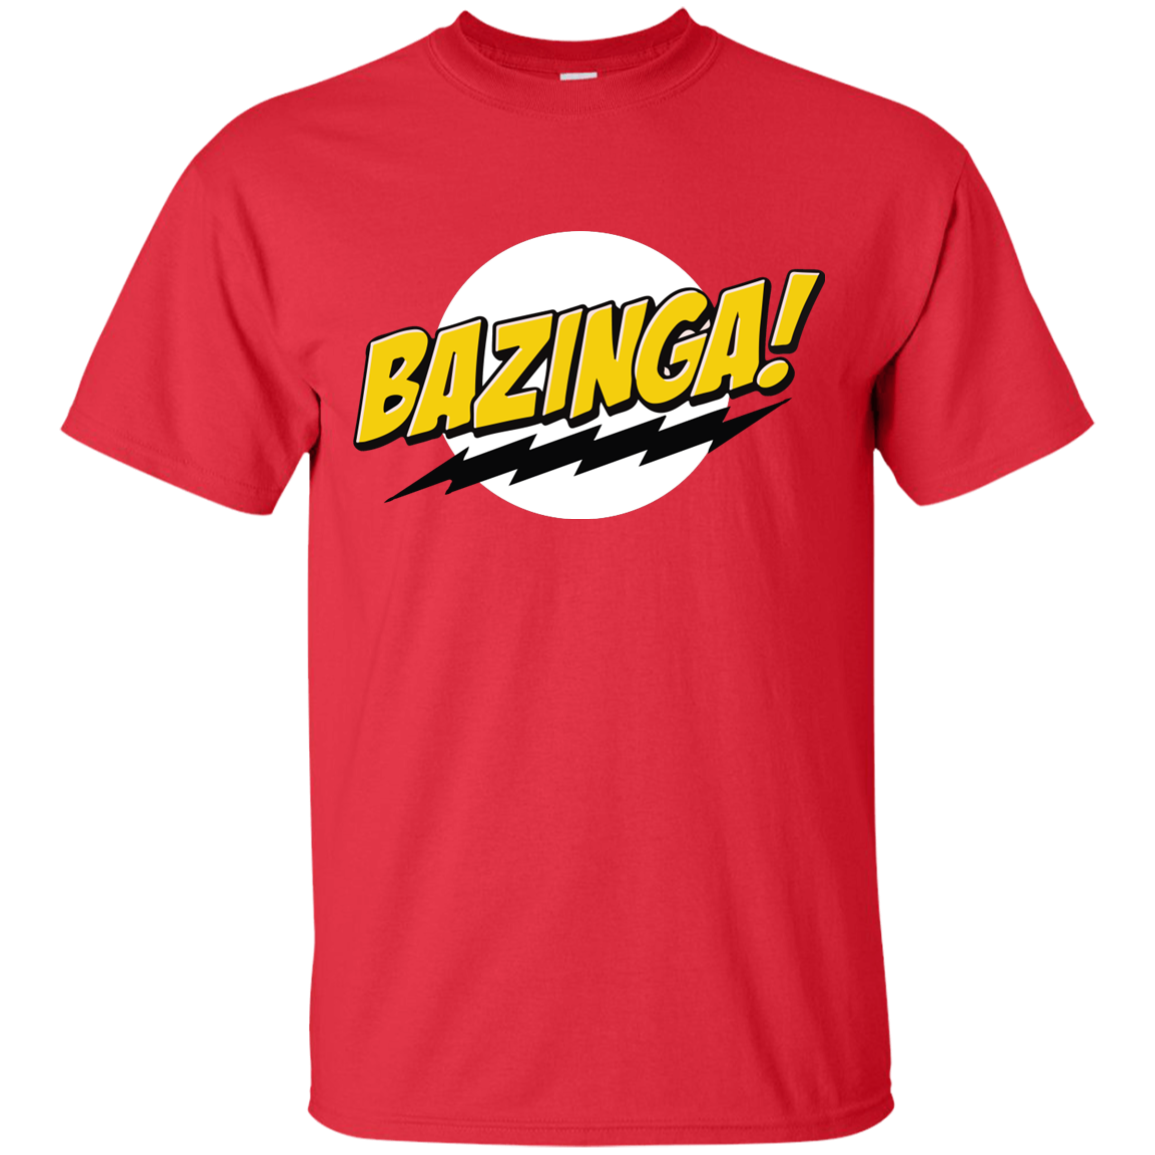 bazinga shirt kohls